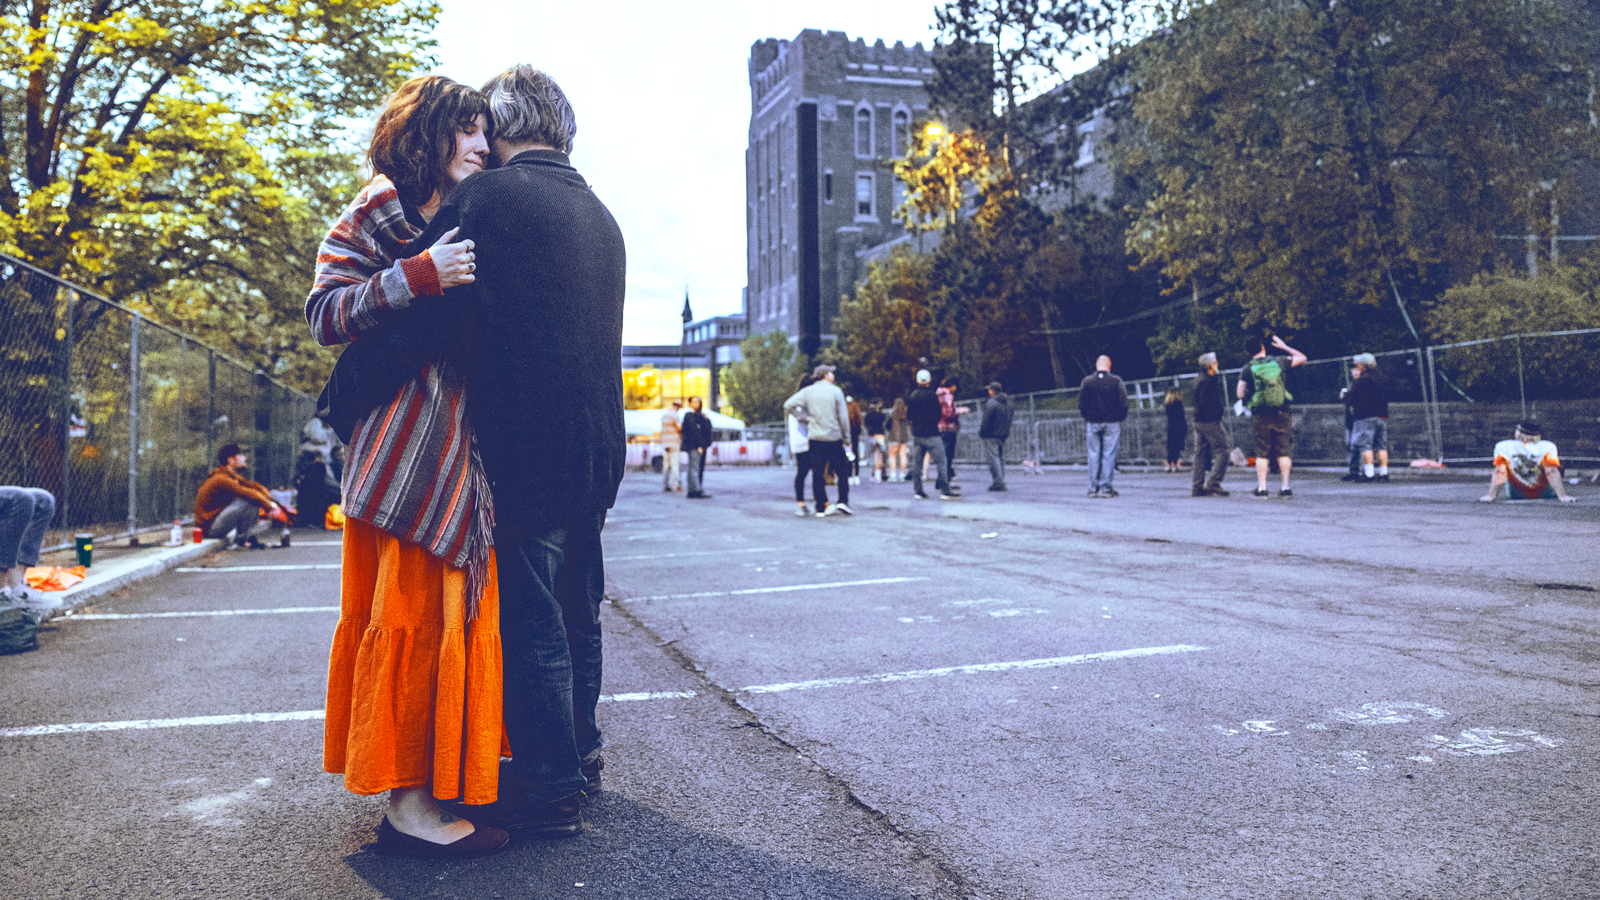 A man and woman embrace outside Barton Hall at Cornell University.